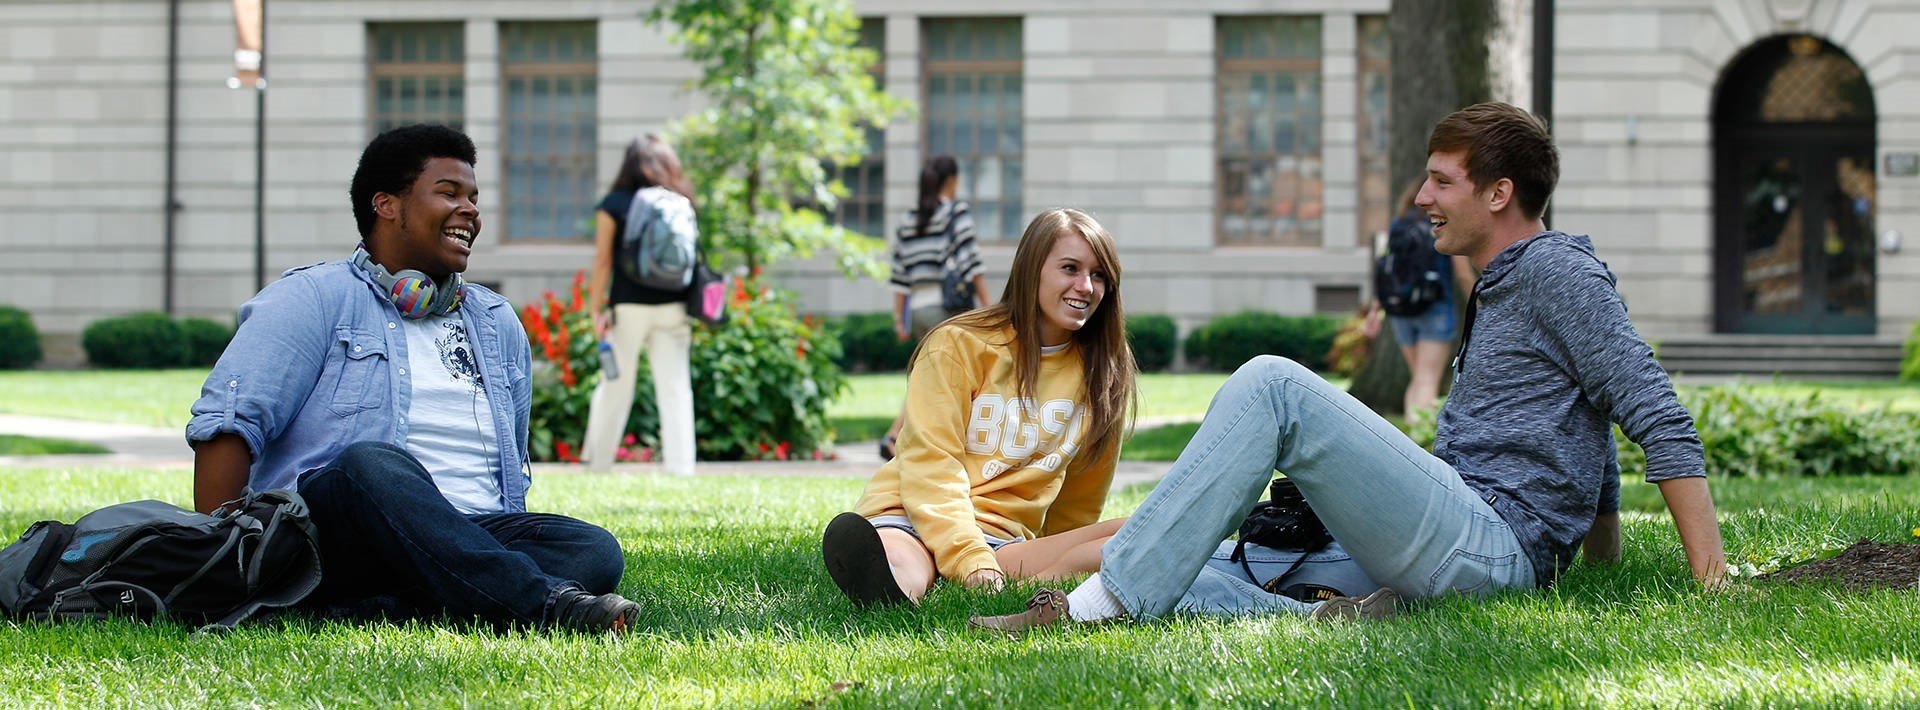 BGSU Students on Lawn